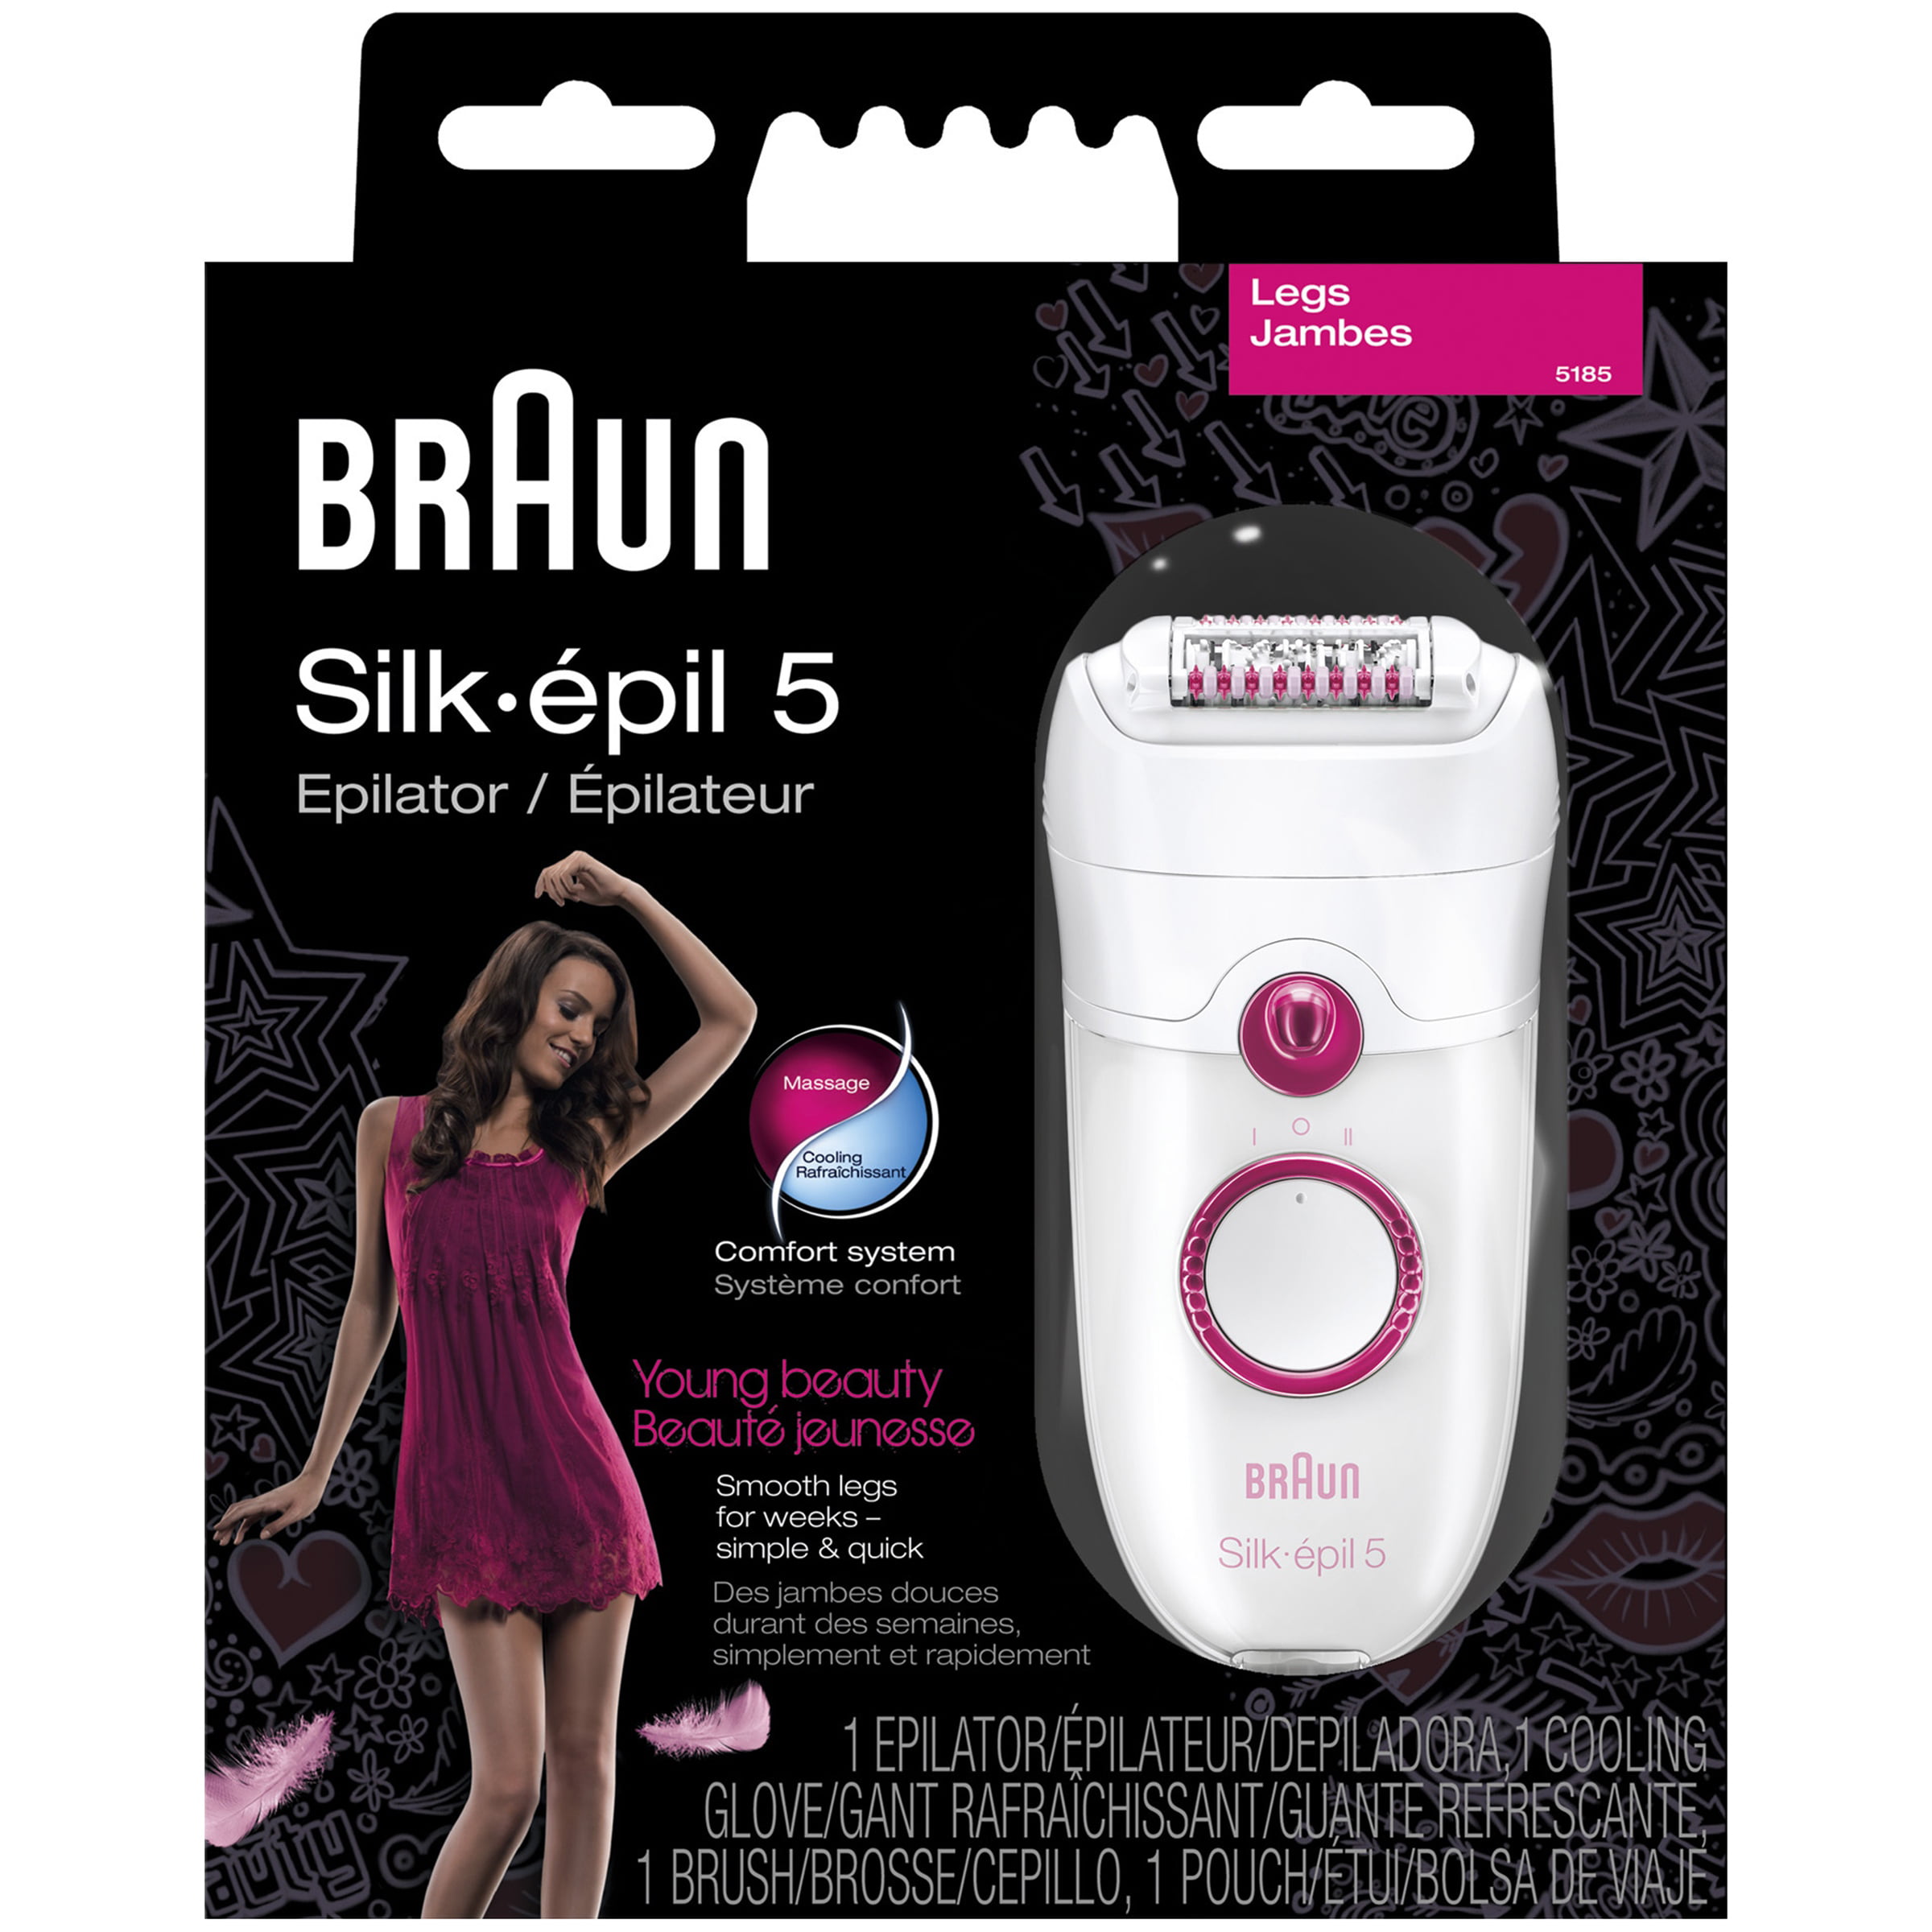 Эпилятор silk epil отзывы. Эпилятор Braun 5. Эпилятор Braun Silk-epil. Браун Силк Эпил комфорт. Браун эпилятор Silk-epil сравнение моделей.